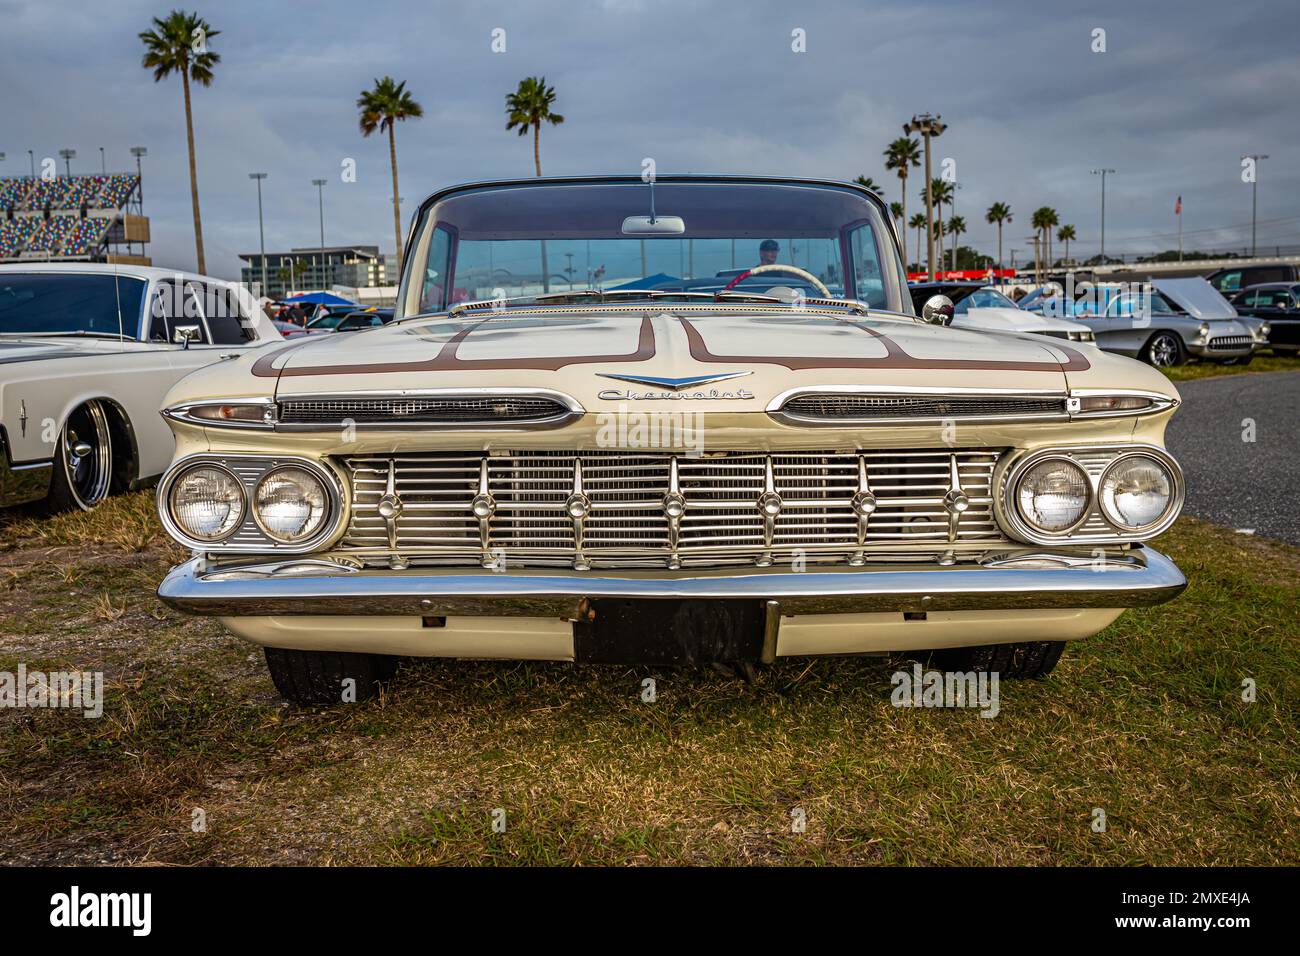 Daytona Beach, FL - November 26, 2022: Low perspective front view of a 1959 Chevrolet El Camino Pickup at a local car show. Stock Photo